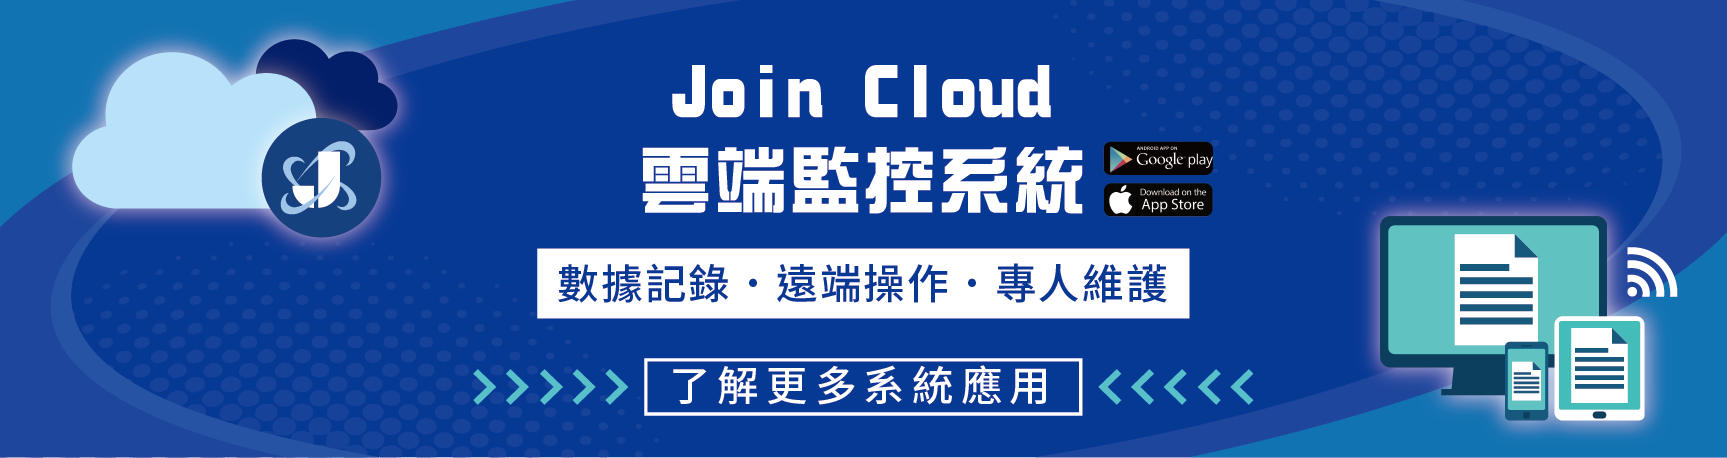 Join-Cloud久德雲端整合系統